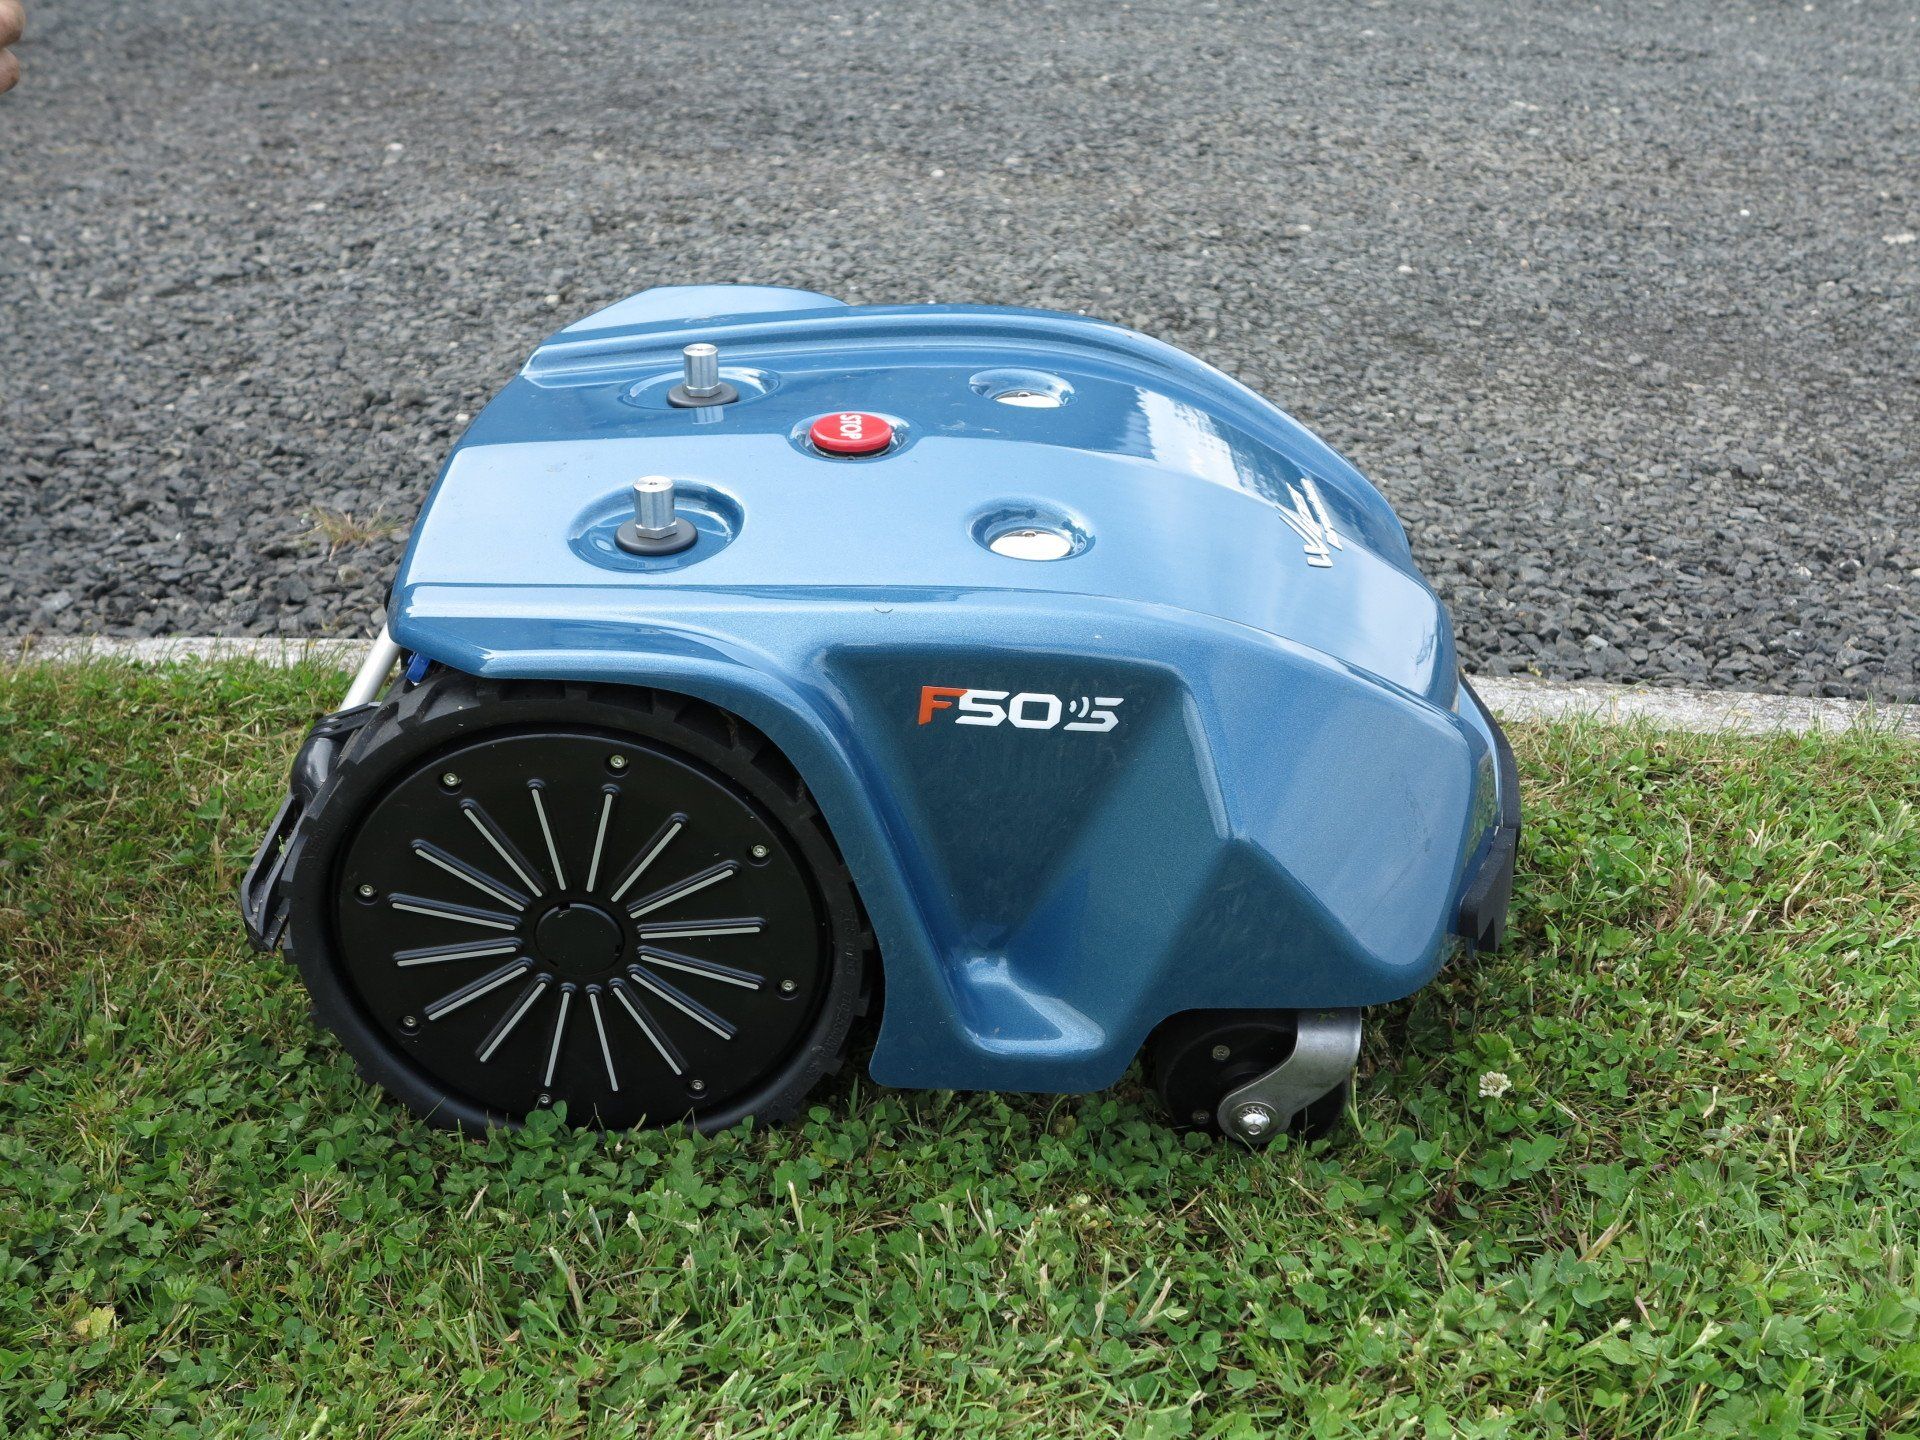 Robot lawn mower instalation free